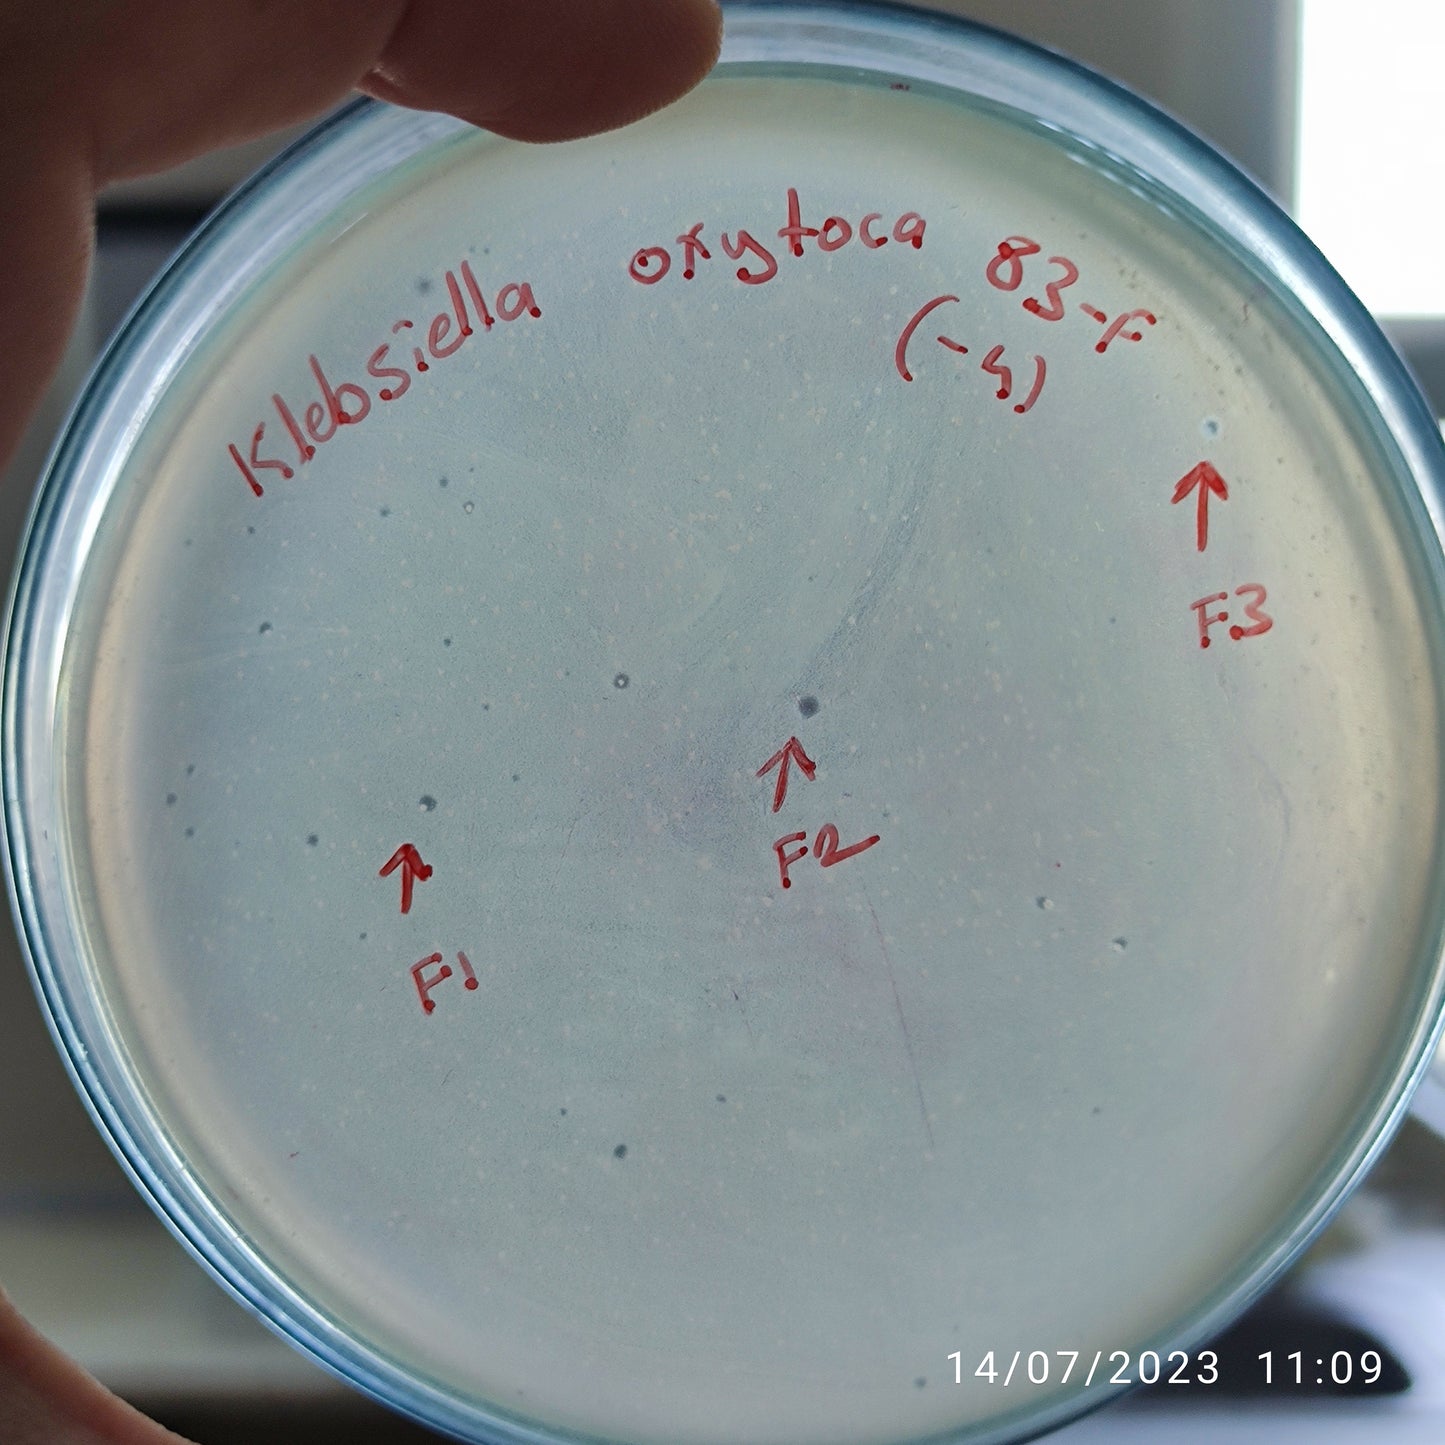 Klebsiella oxytoca bacteriophage 188083F